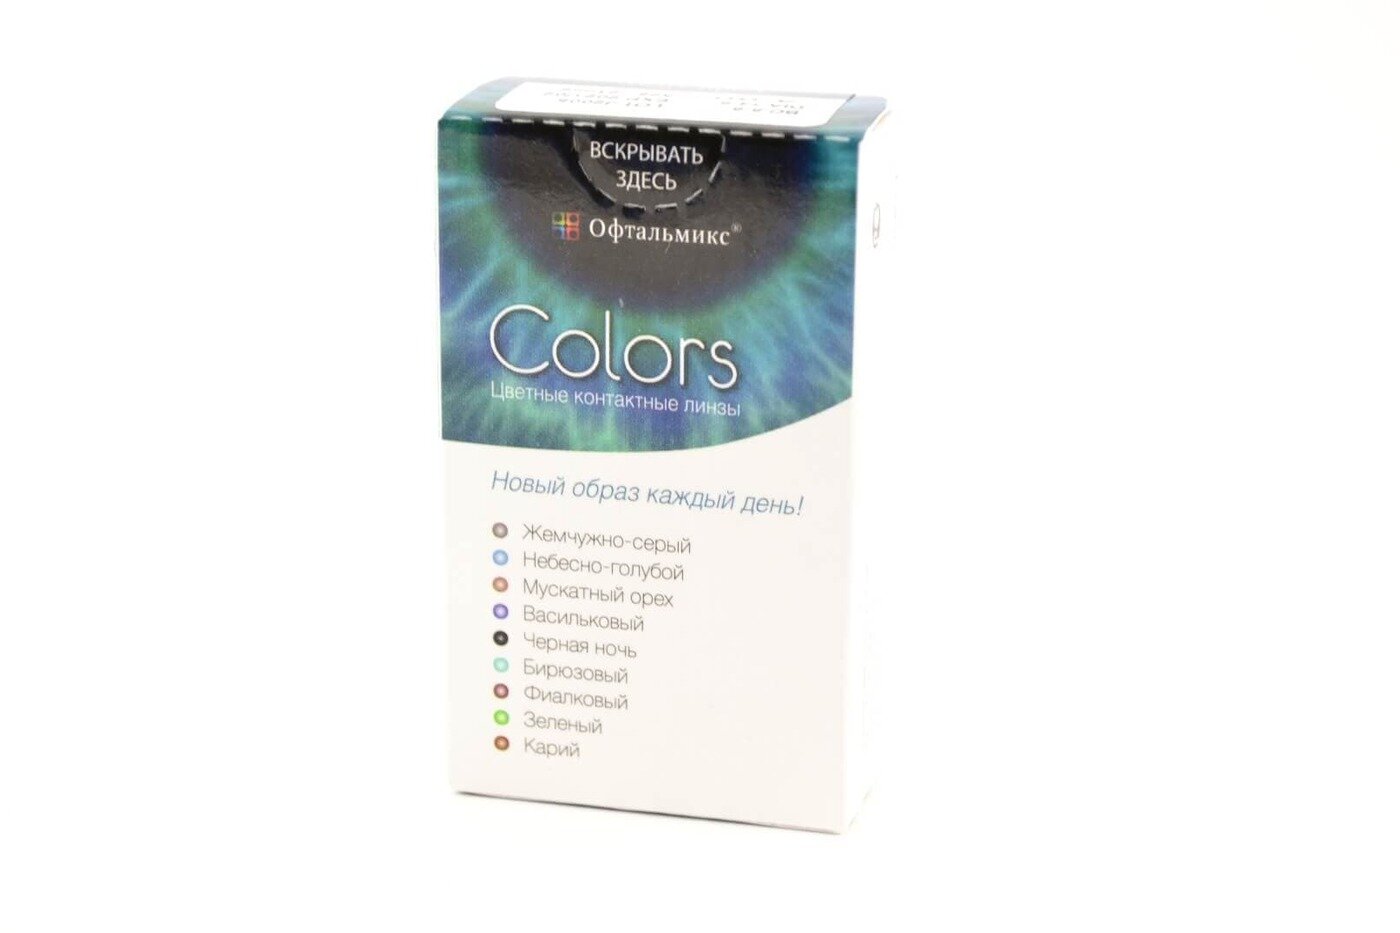 Офтальмикс Colors New (2 линзы)-8.50 R.8.6 Turquoise(Бирюзовый)